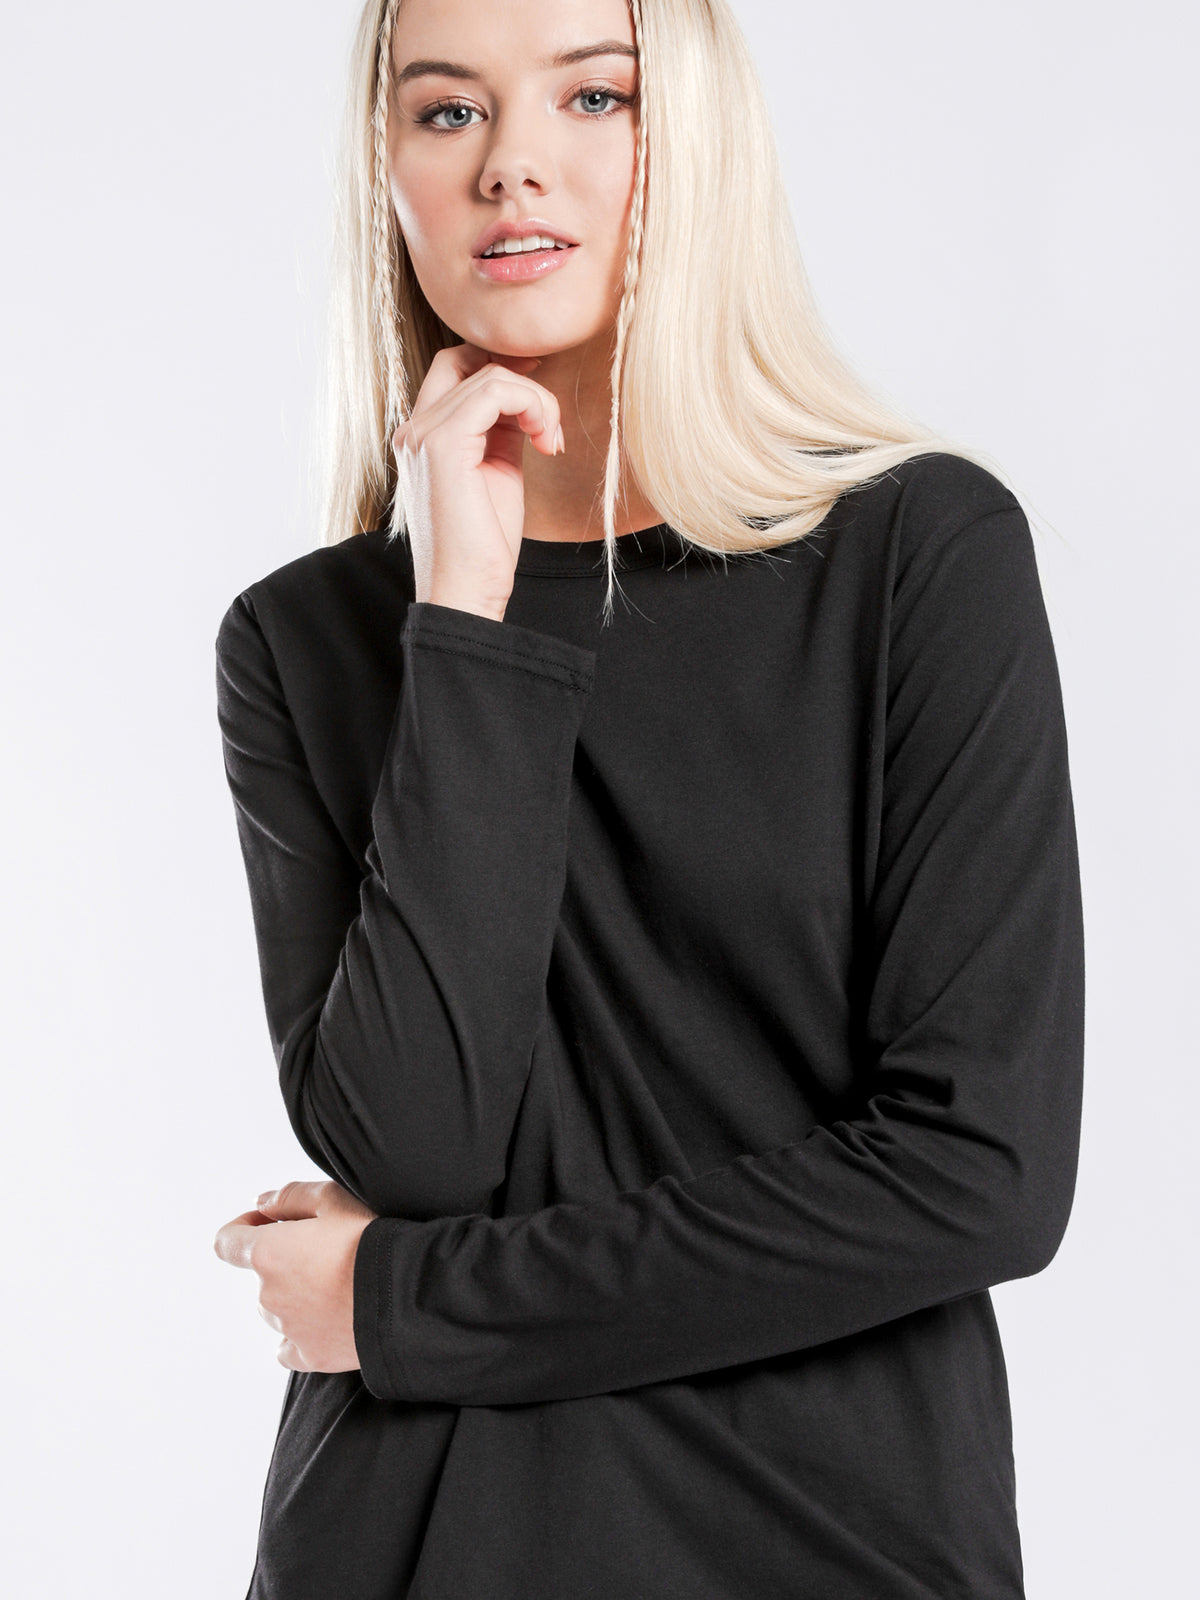 Ava Long Sleeve Top in Black